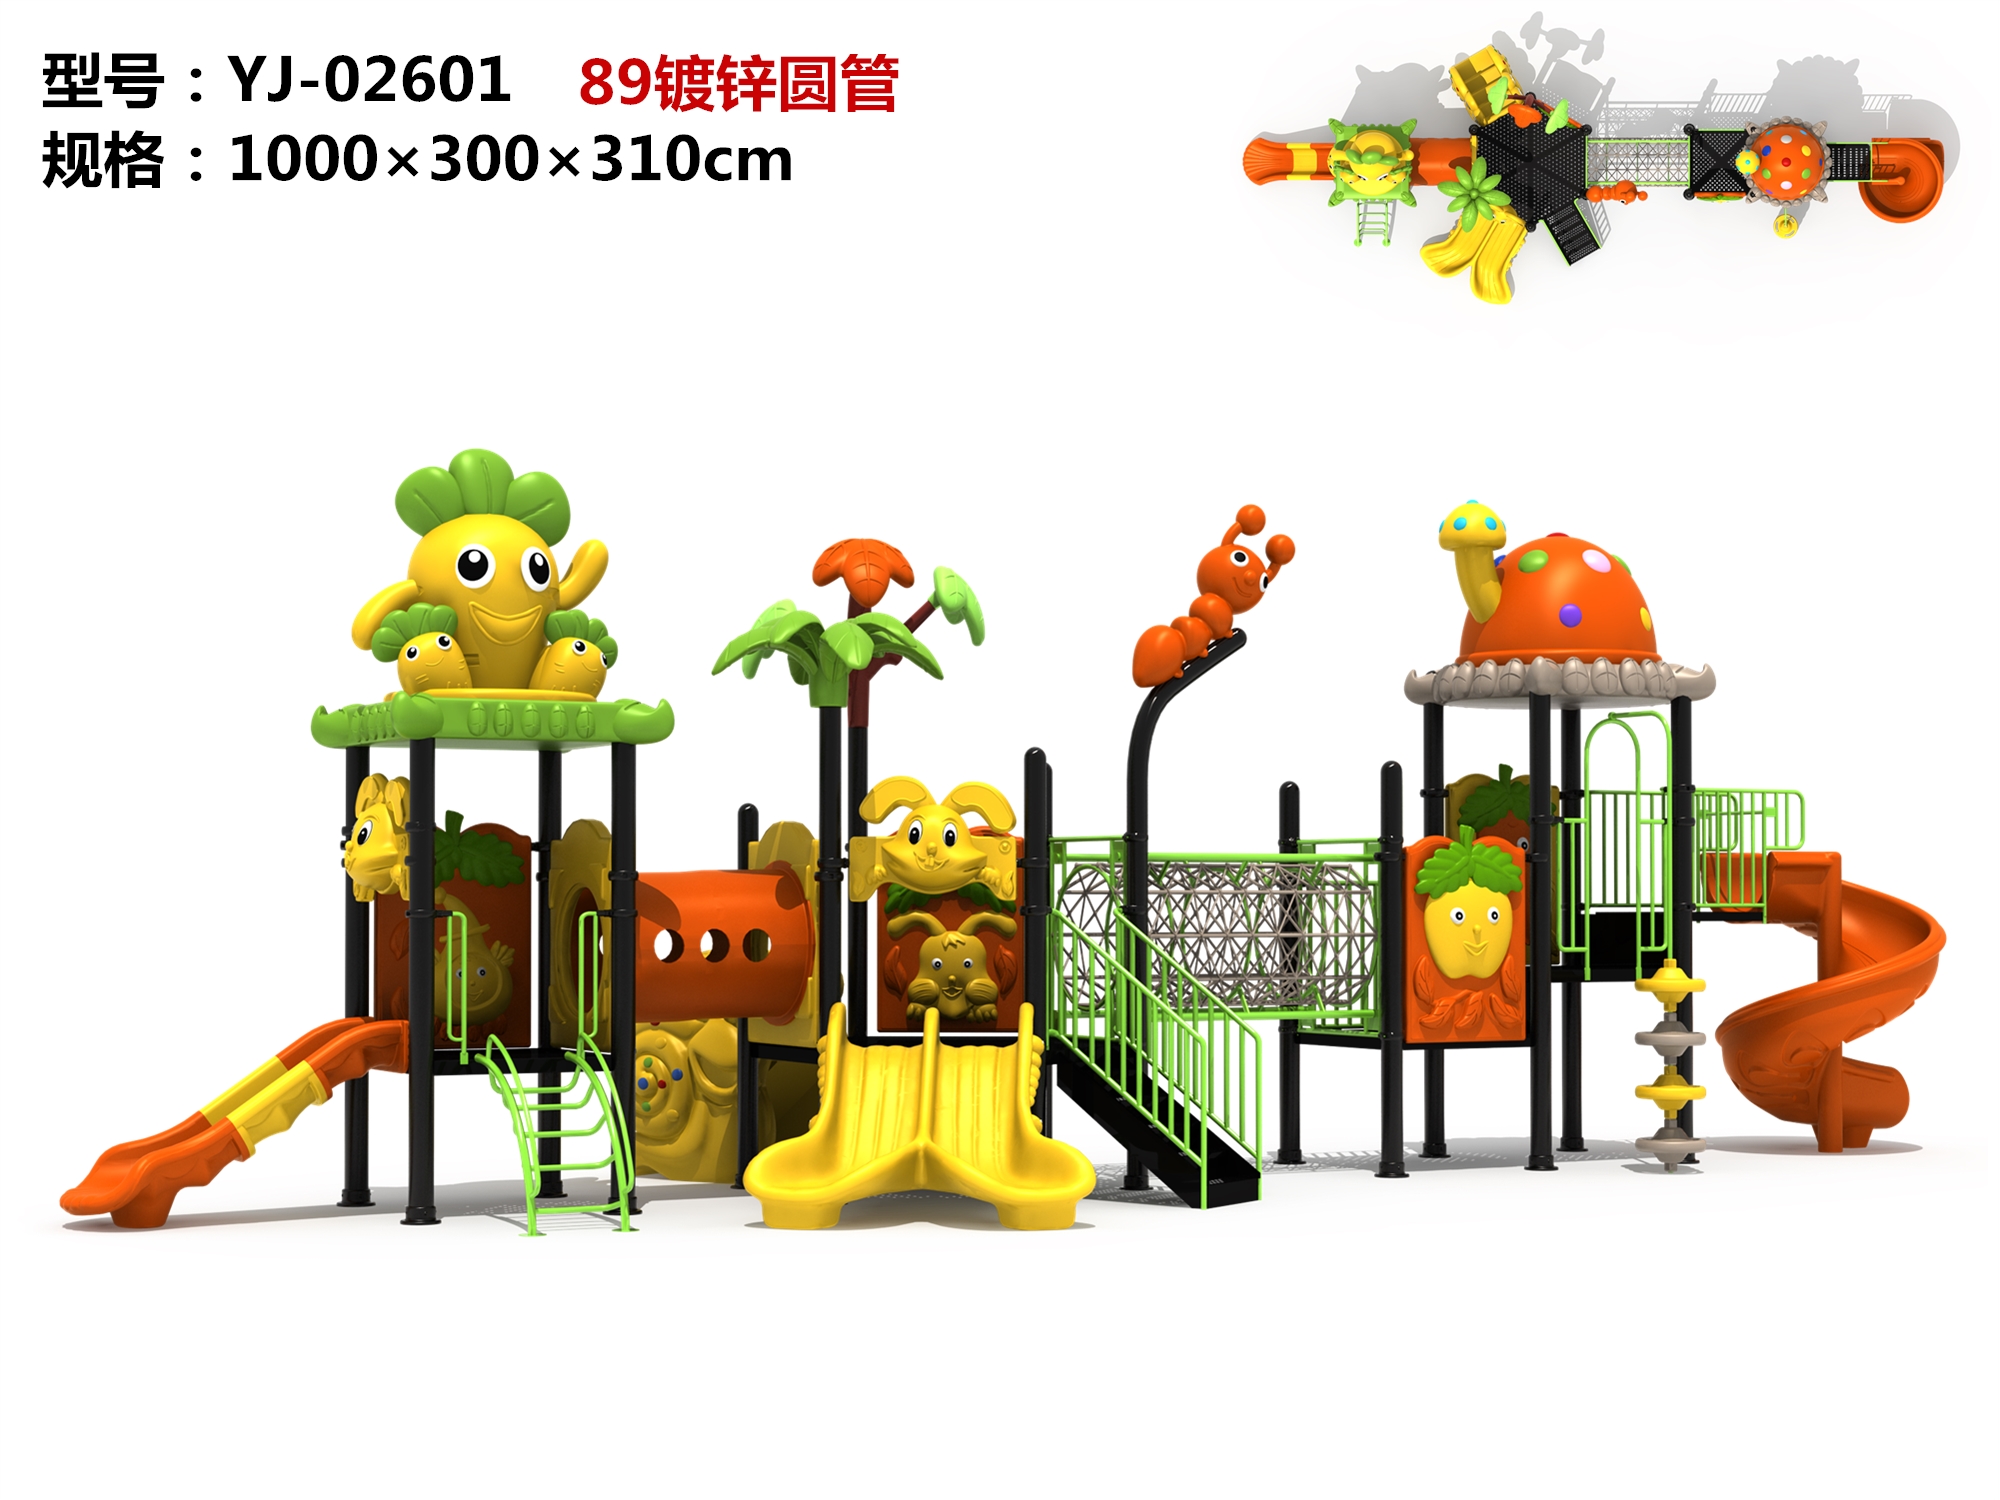 OL-MH02601Sensory outdoor playground equipment